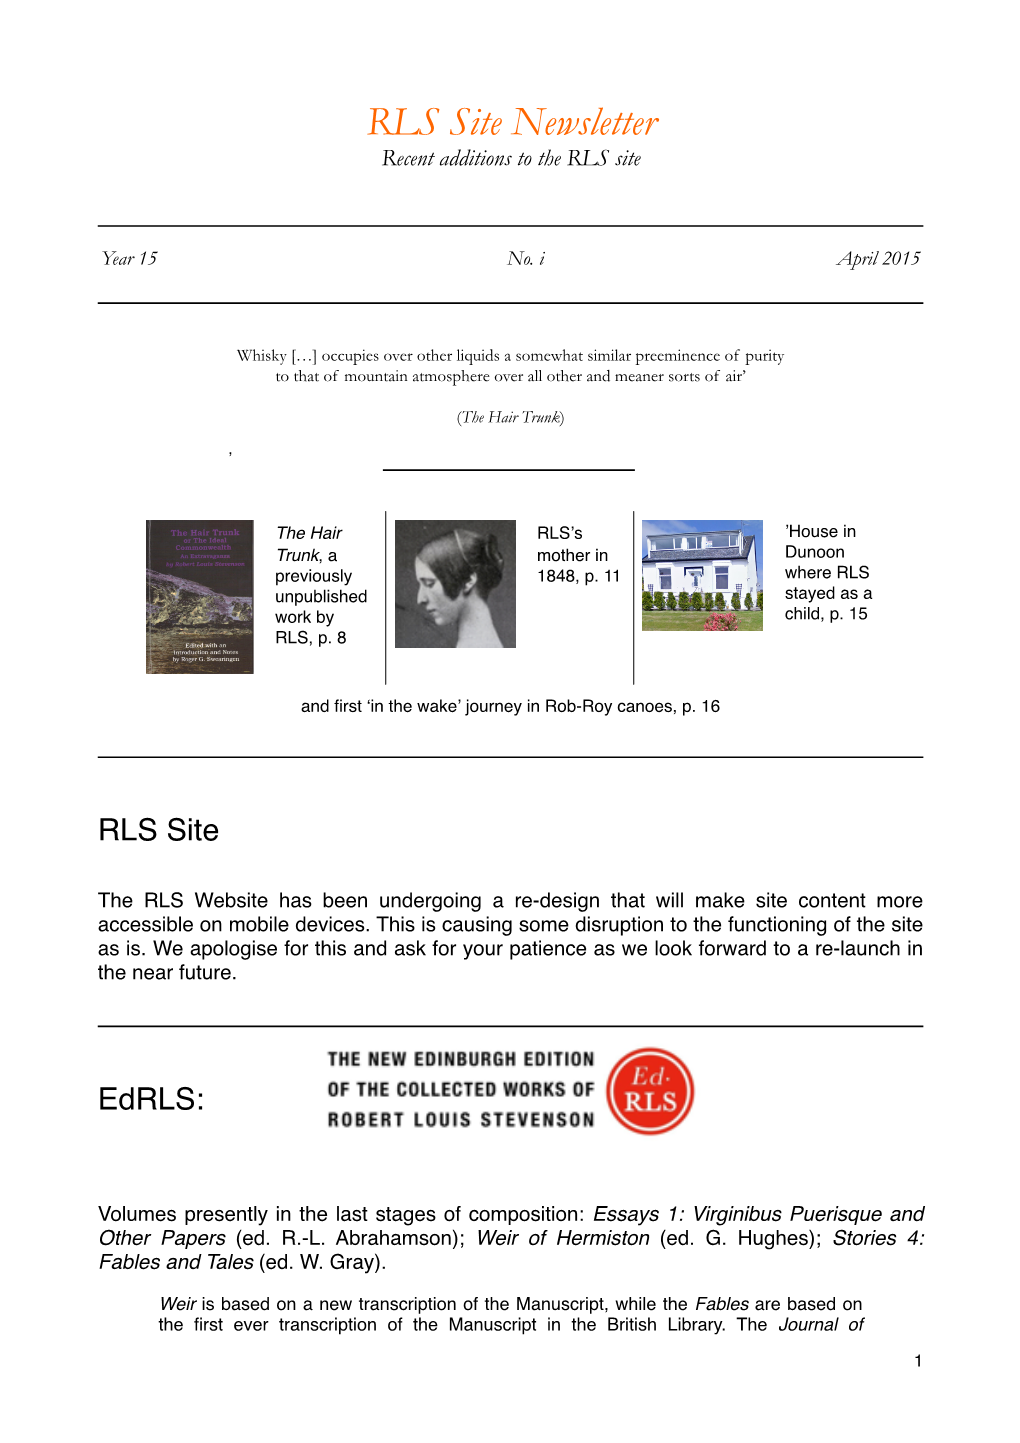 RLS Site Newsletter Recent Additions to the RLS Site